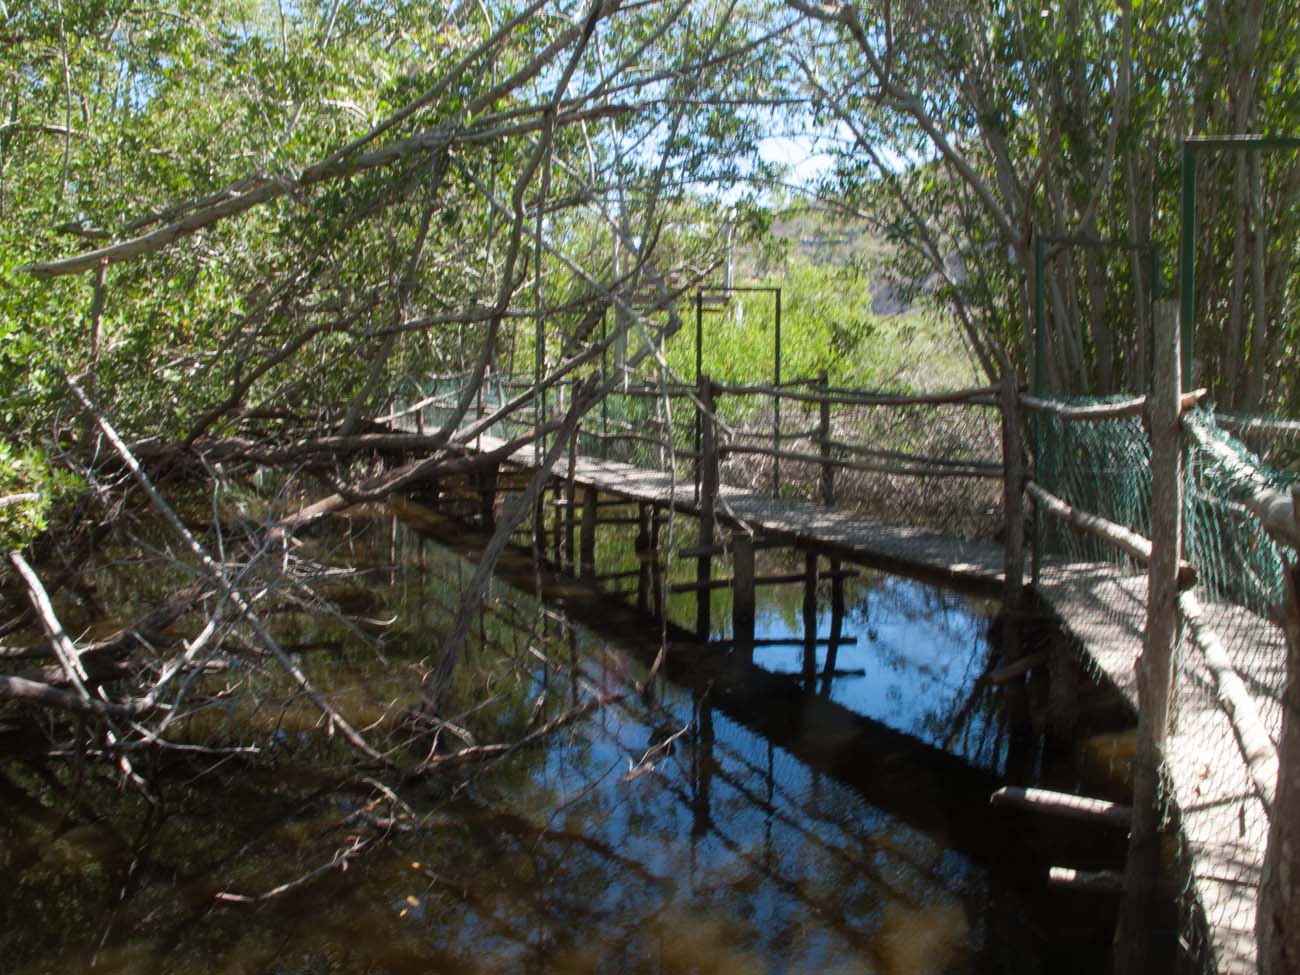 Bridges over the crocodile haven